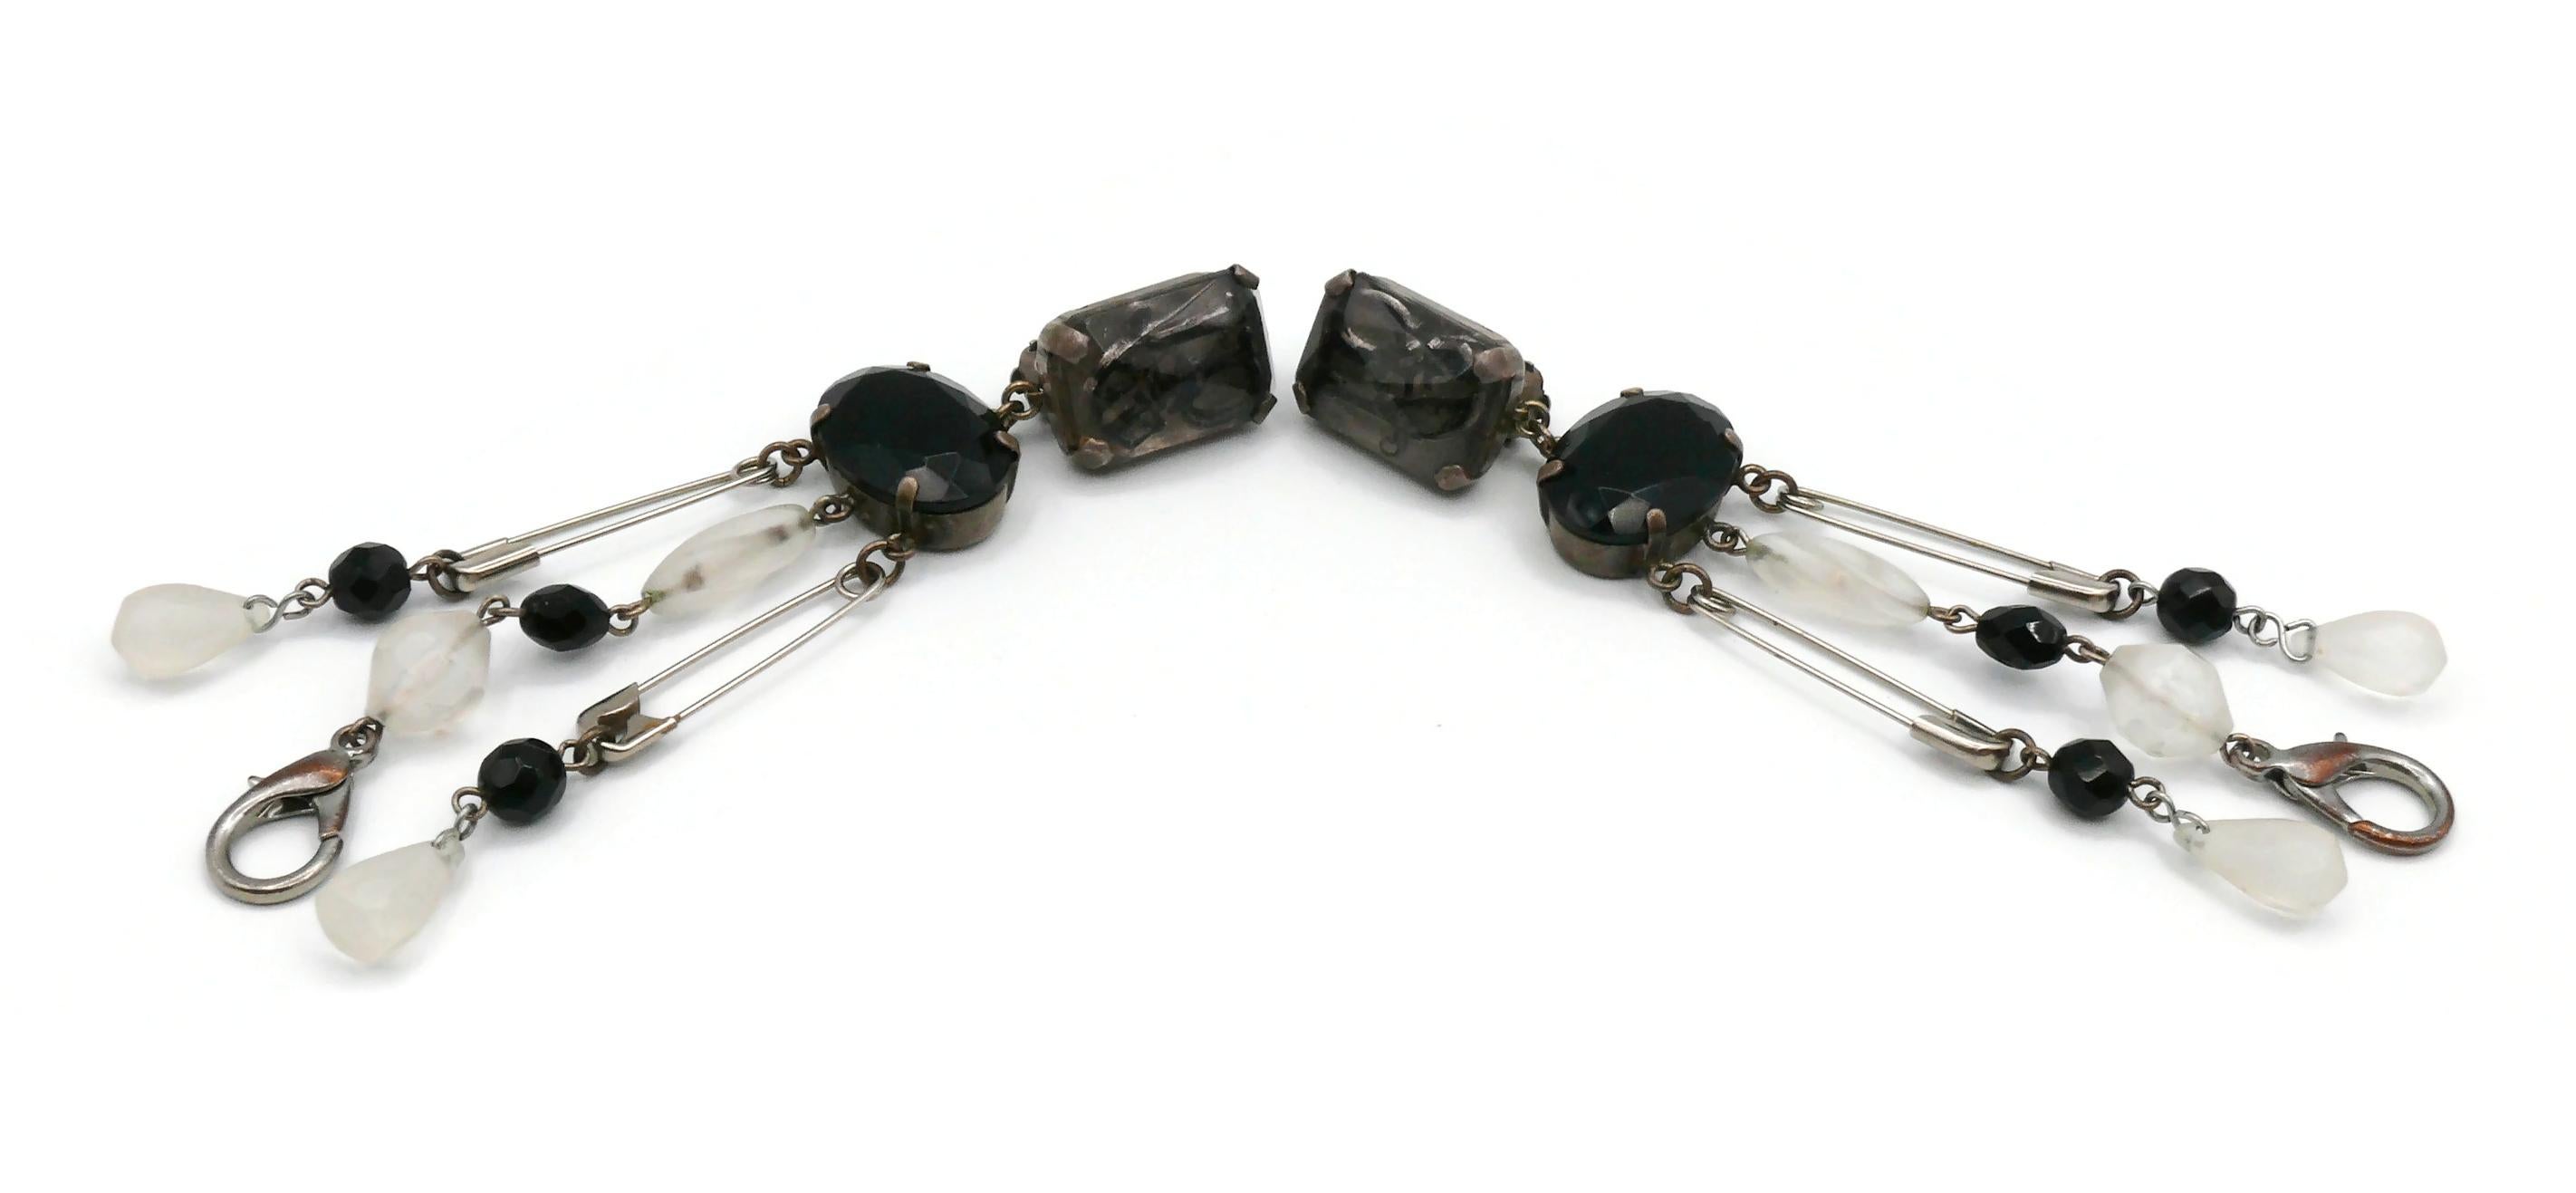 Jean Paul Gaultier Vintage Punk Safety Pin Shoulder Duster Dangling Earrings For Sale 1